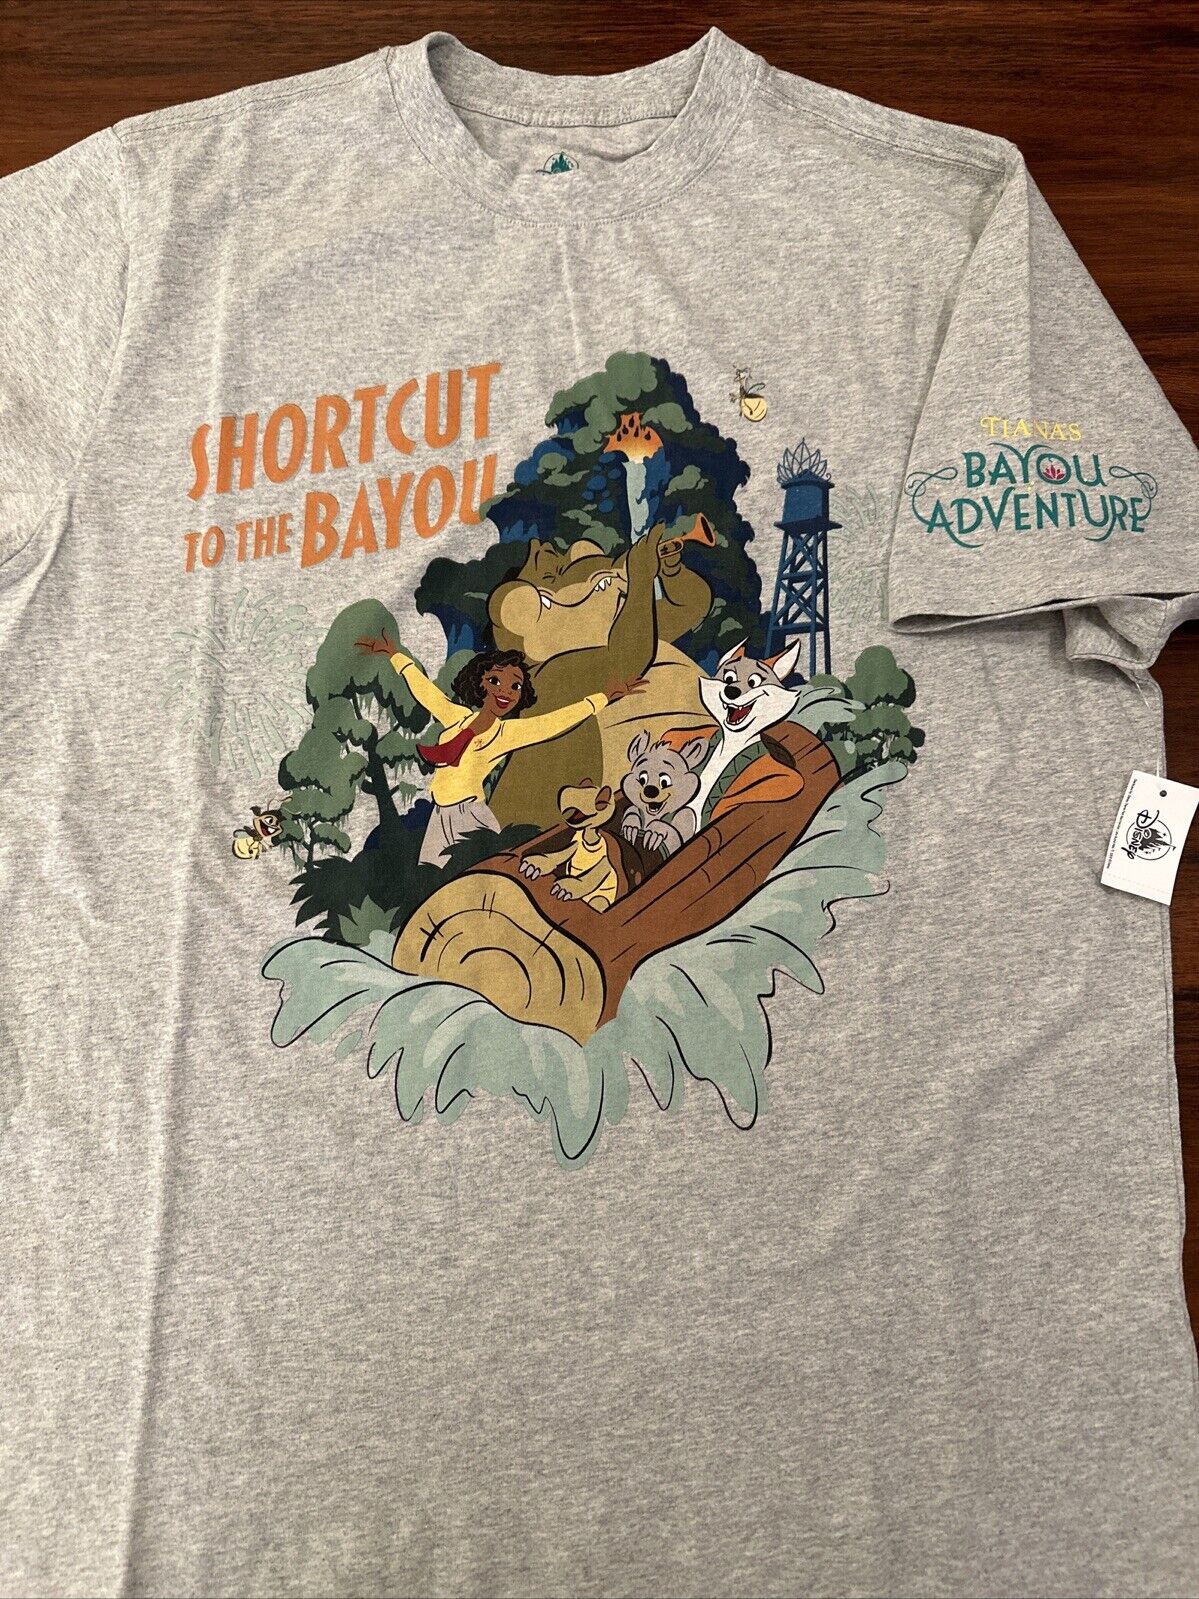 Disney Tiana’s Shortcut To Bayou Adventure Adult Shirt Size Large L LG New